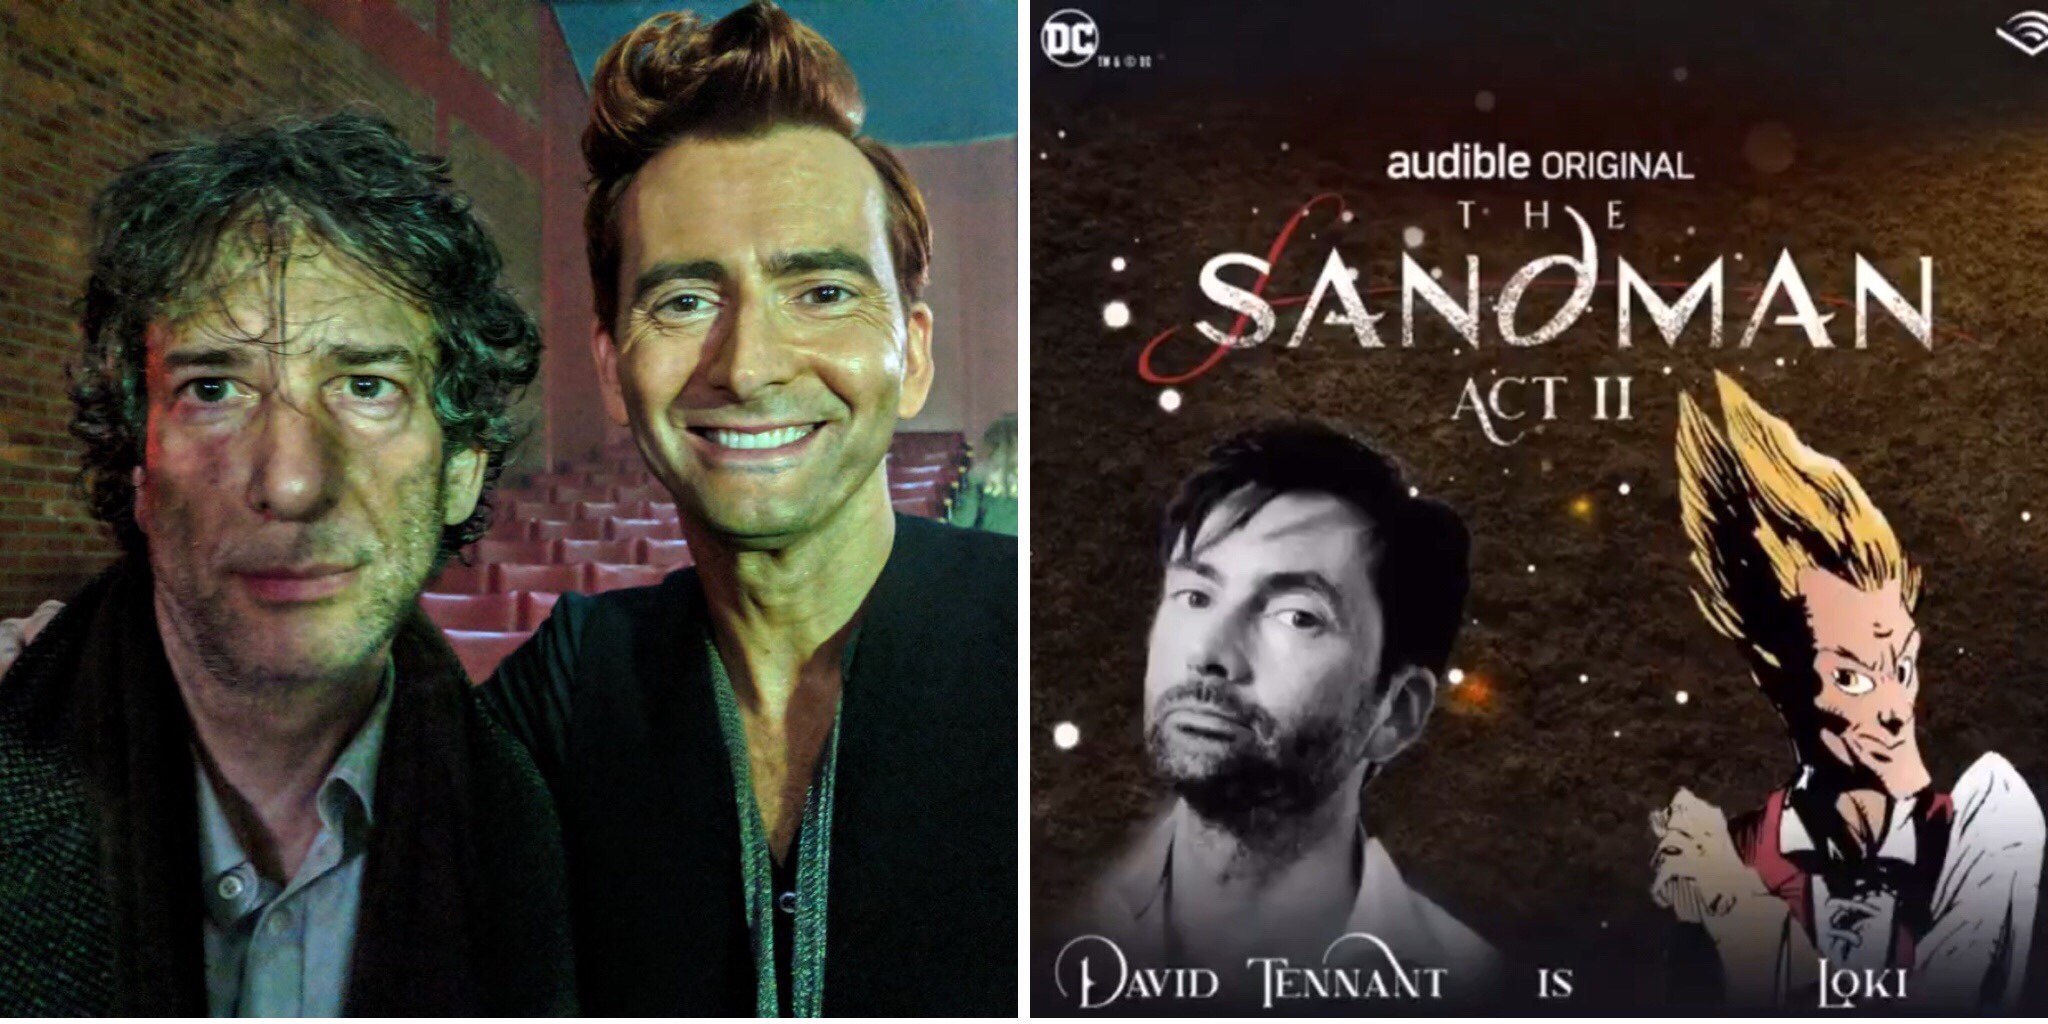 David Tennant Joins The Cast Of Neil Gaiman s The Sandman Act II